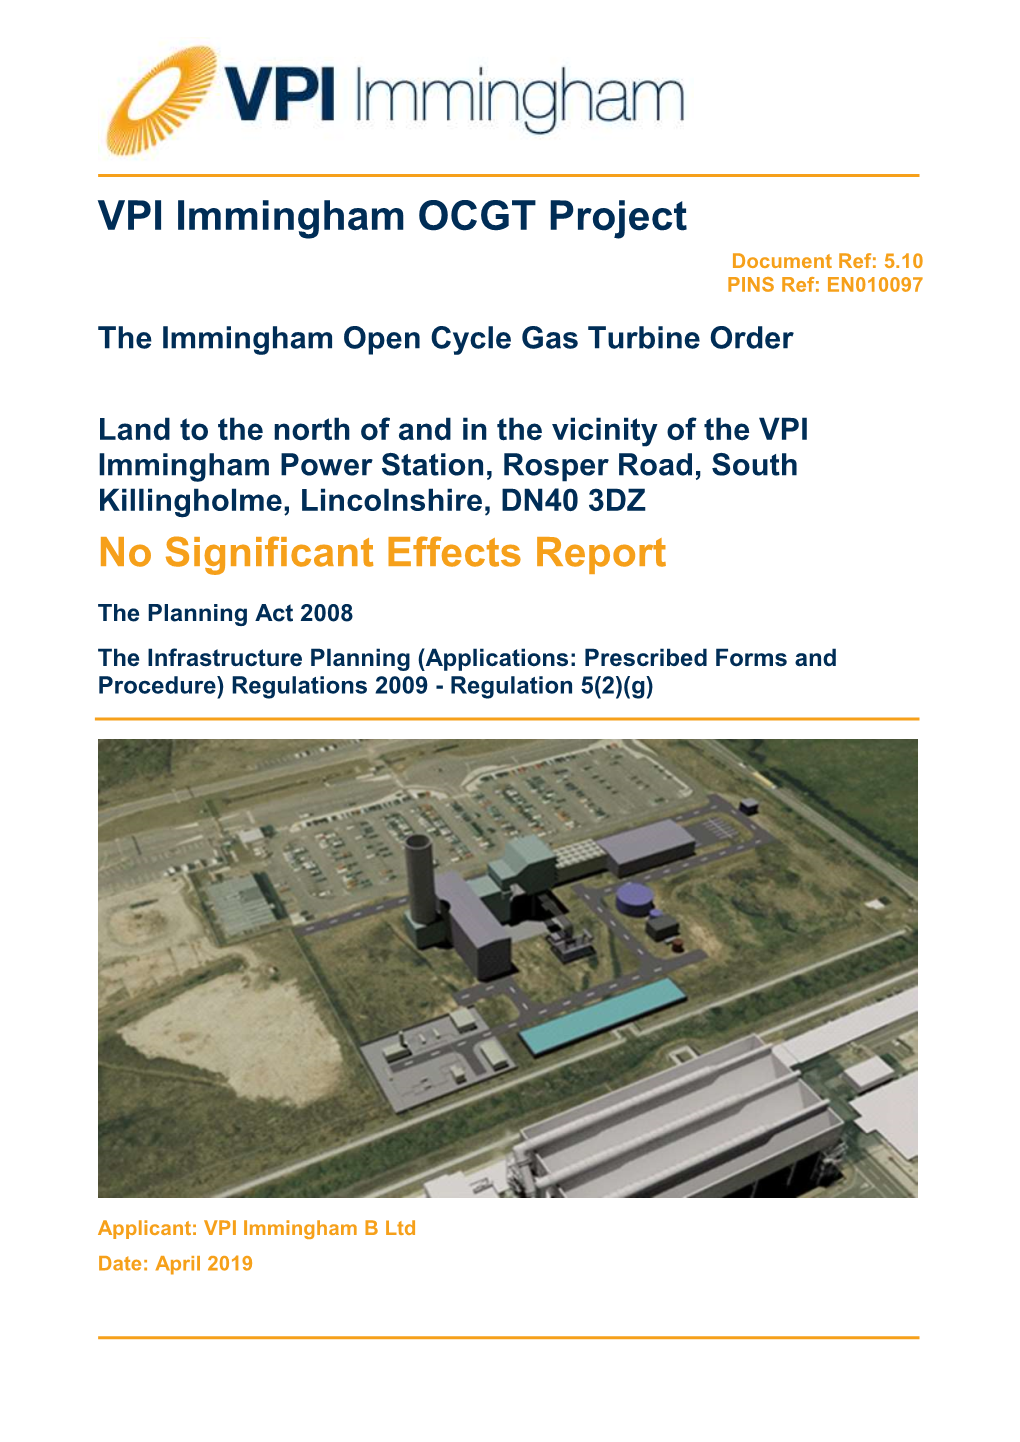 VPI Immingham OCGT Project No Significant Effects Report